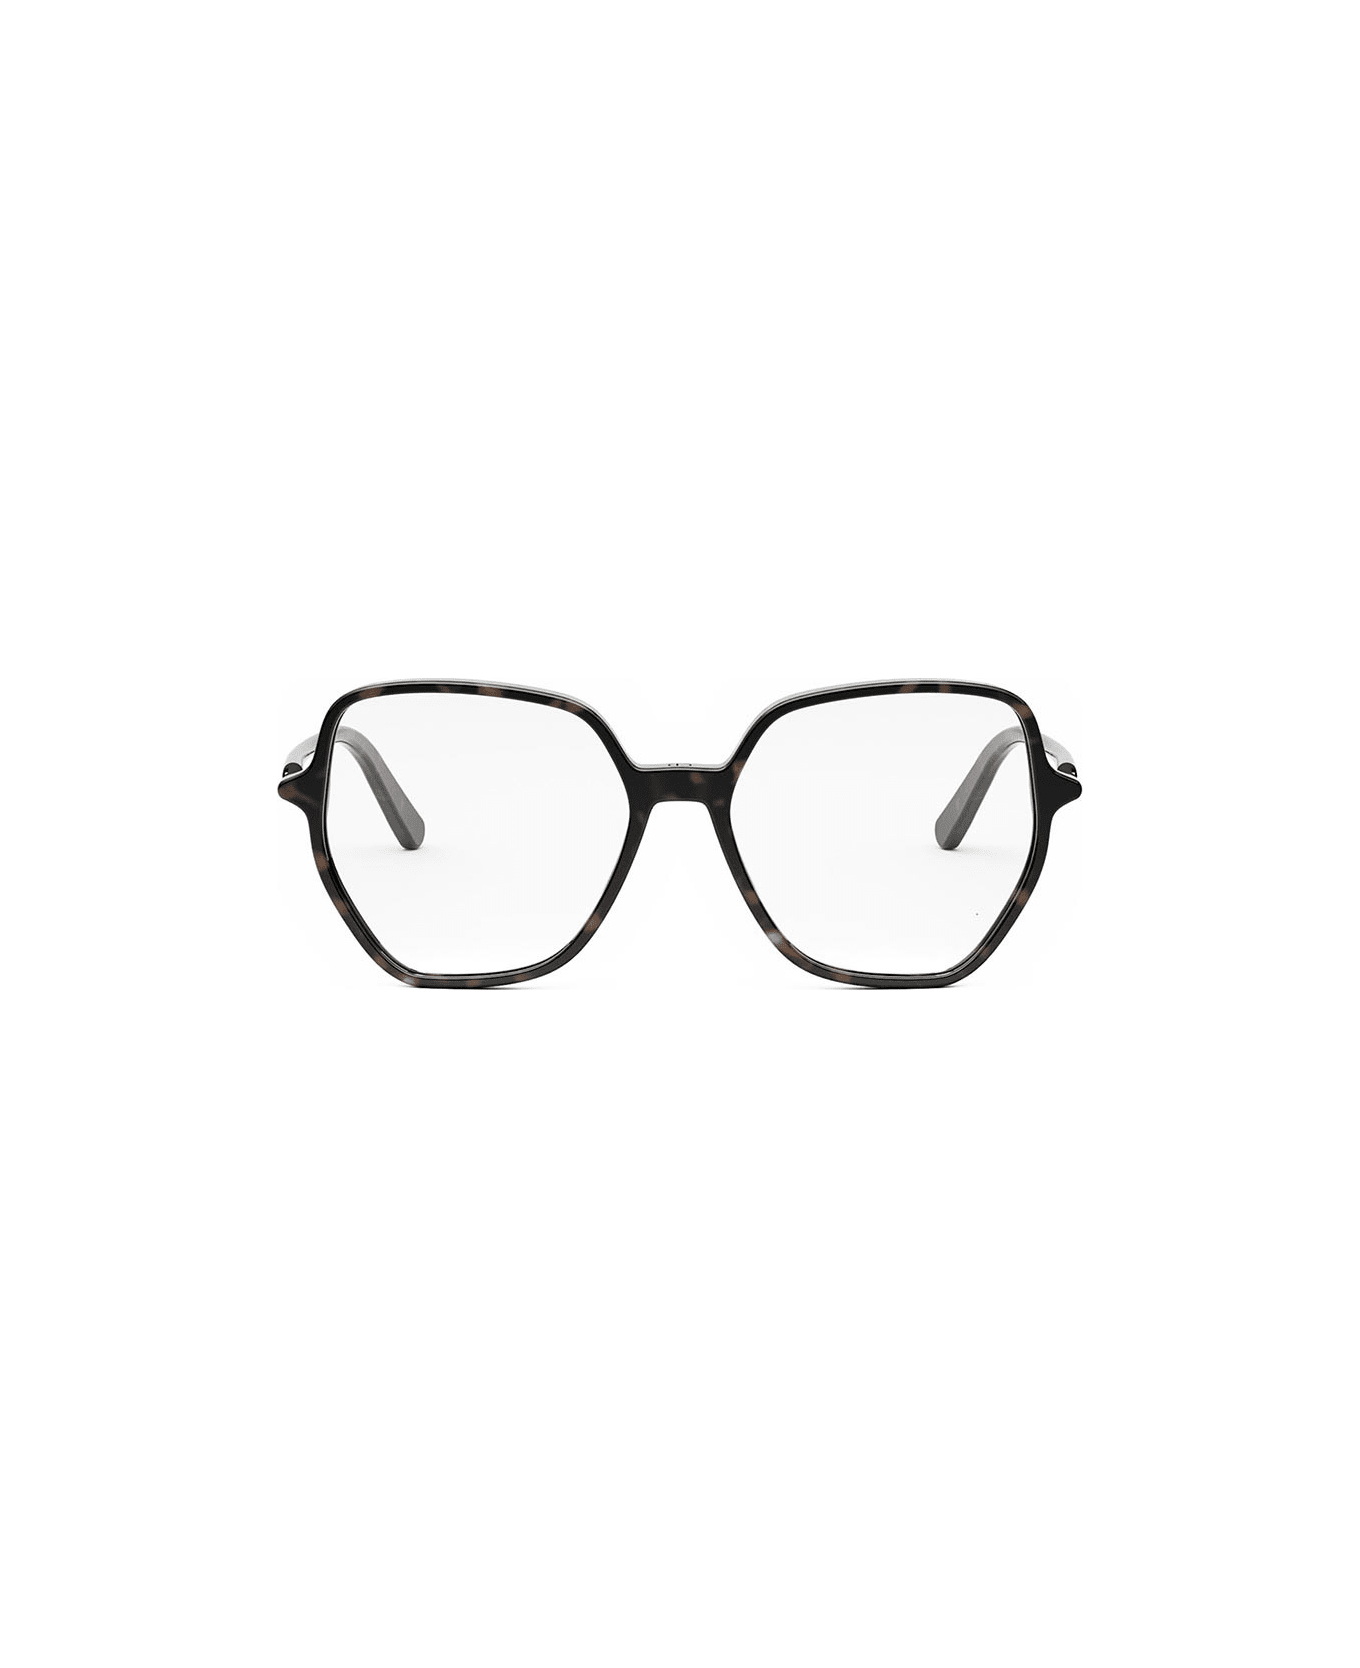 Dior Eyewear Glasses - Havana アイウェア